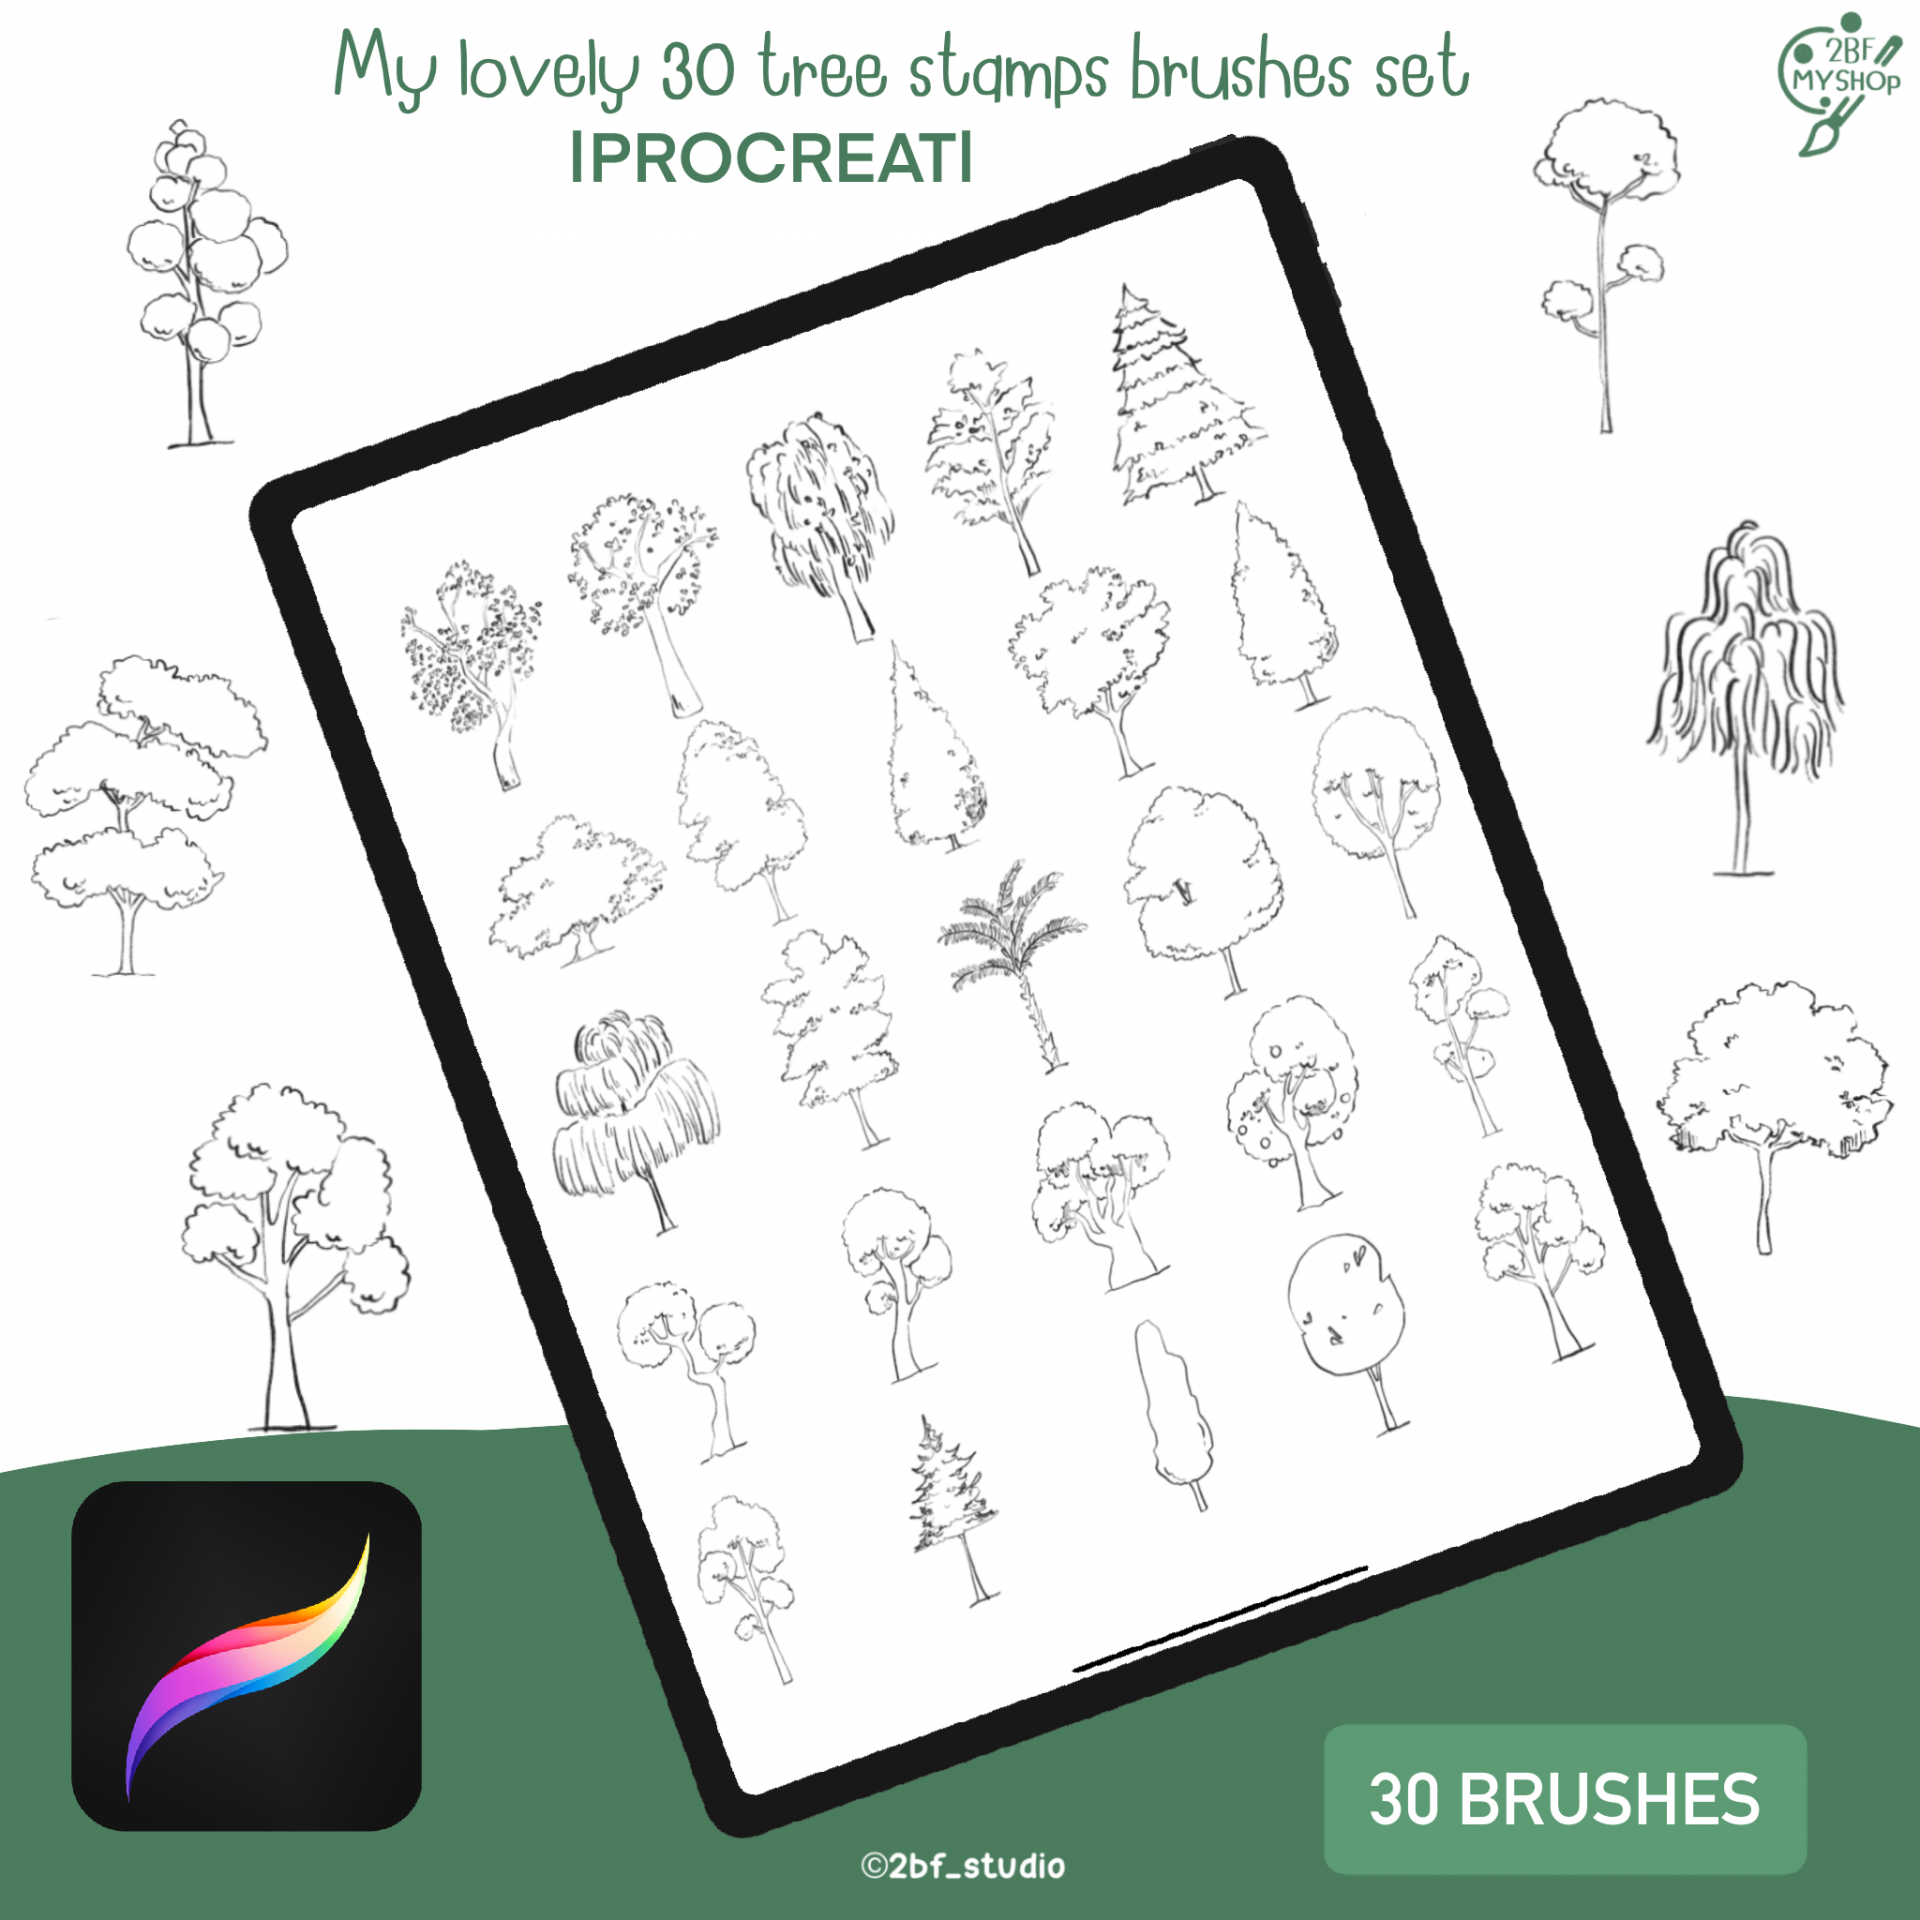 My My lovely 30 tree stamps brushes set   |PROCREAT BRUSHED|